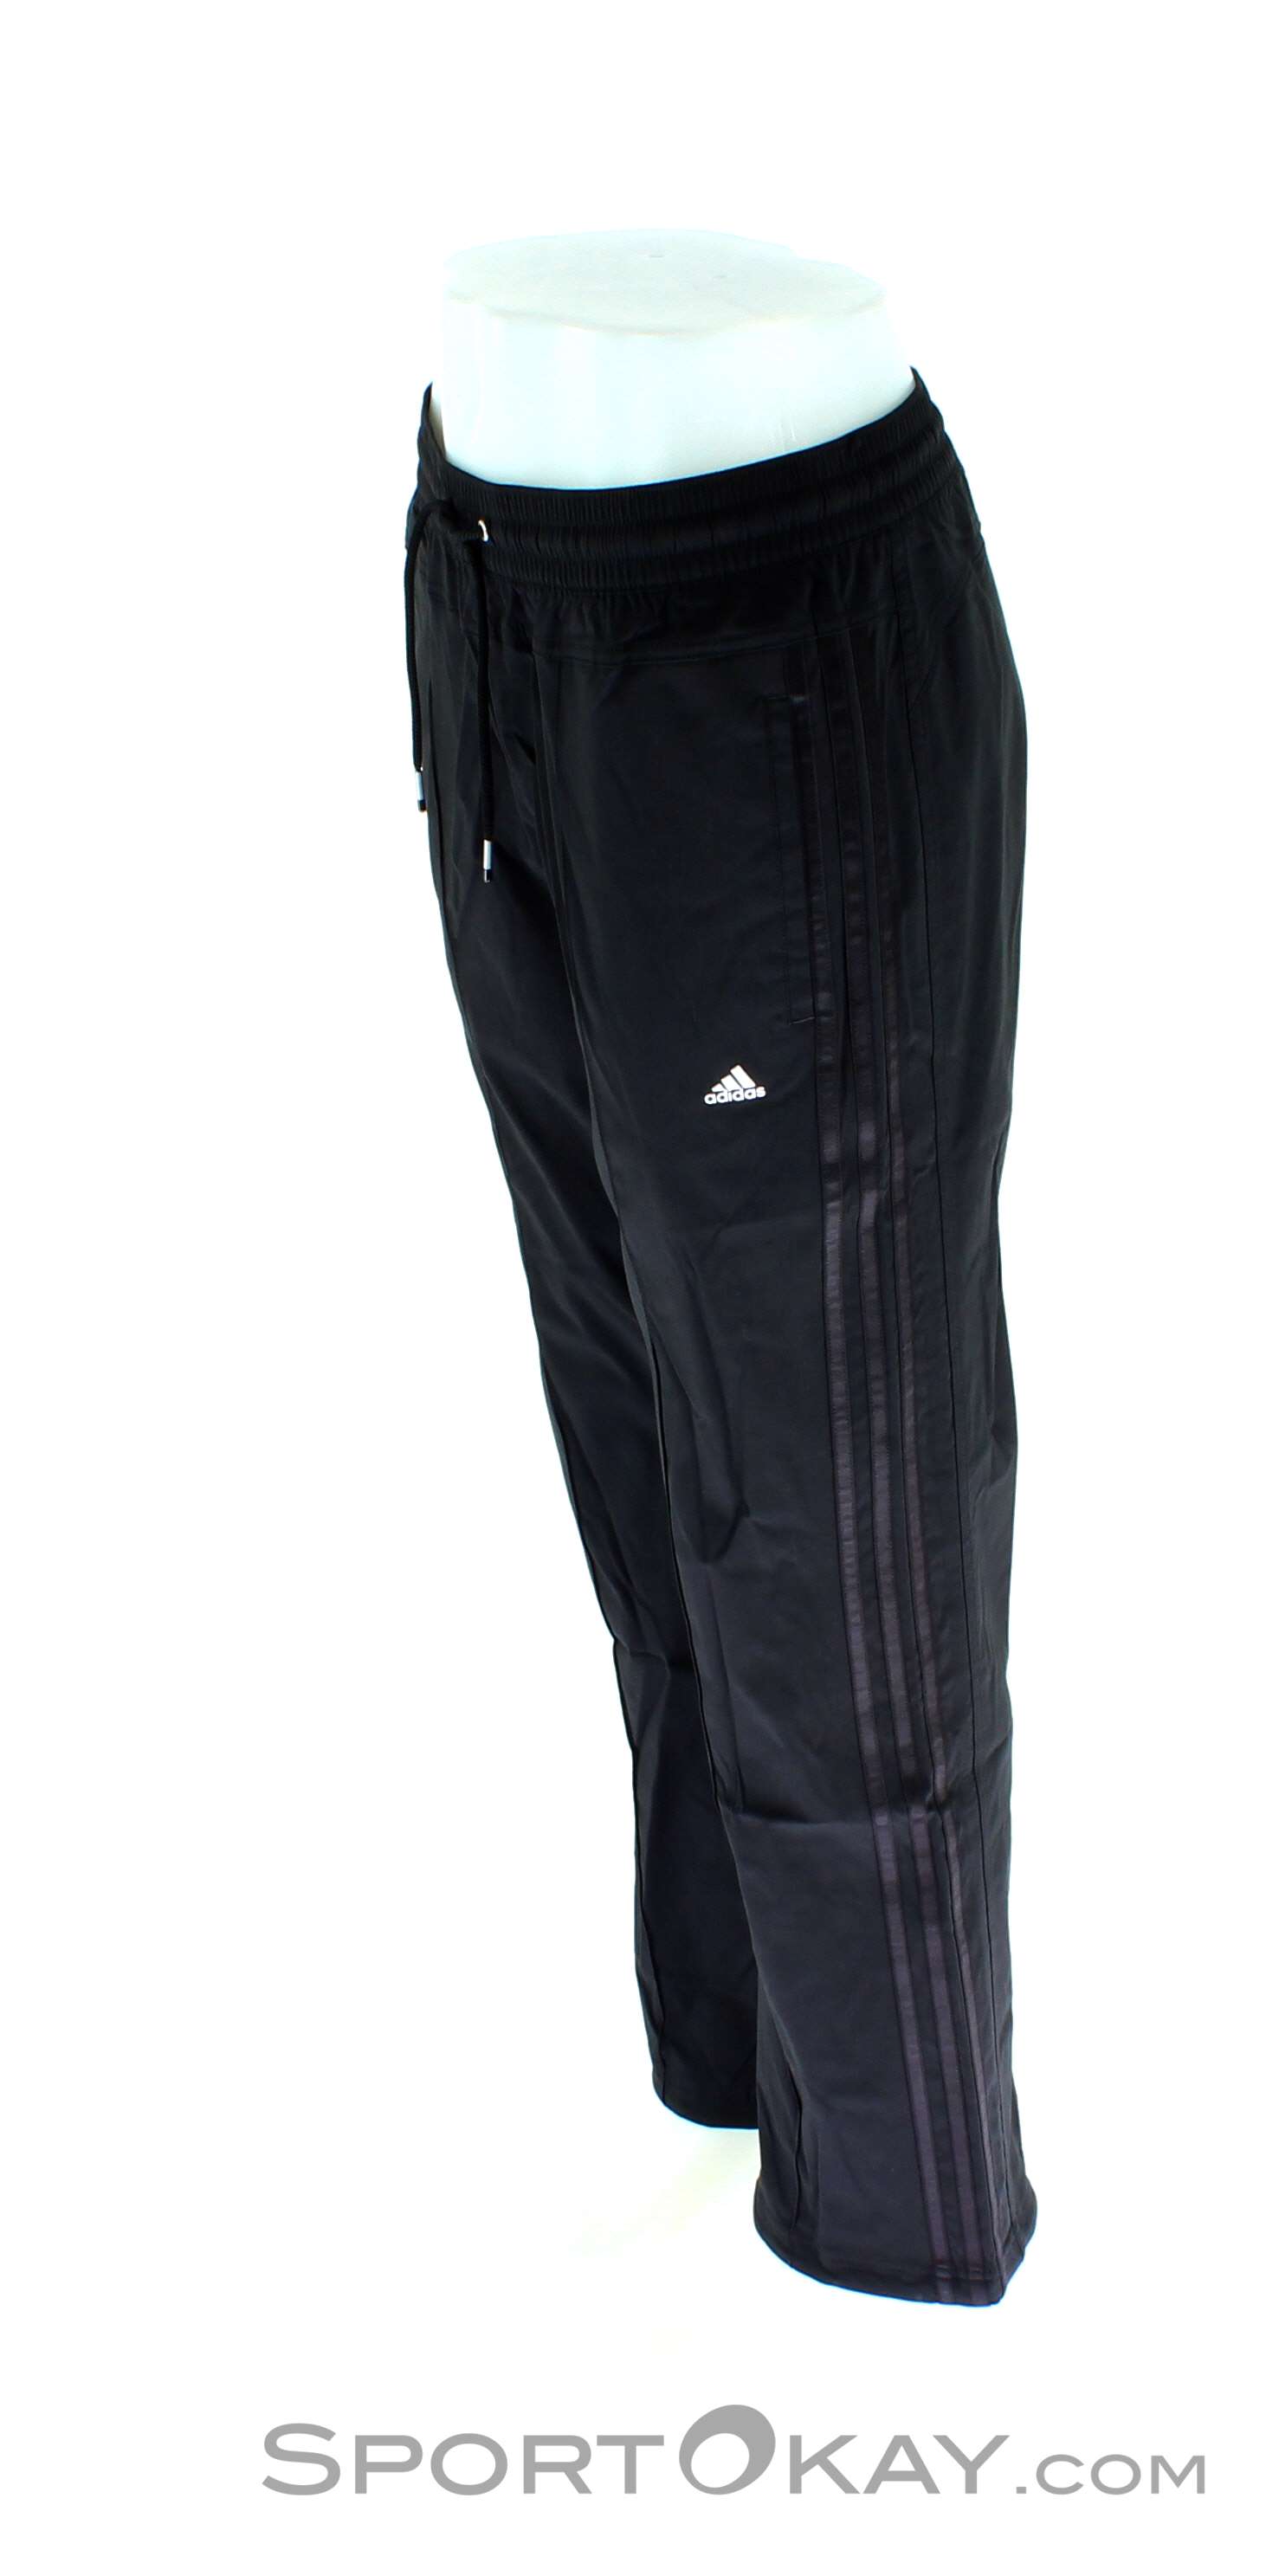 Adidas Climacool Training 3S Woven Stretch Pant Damen Traini